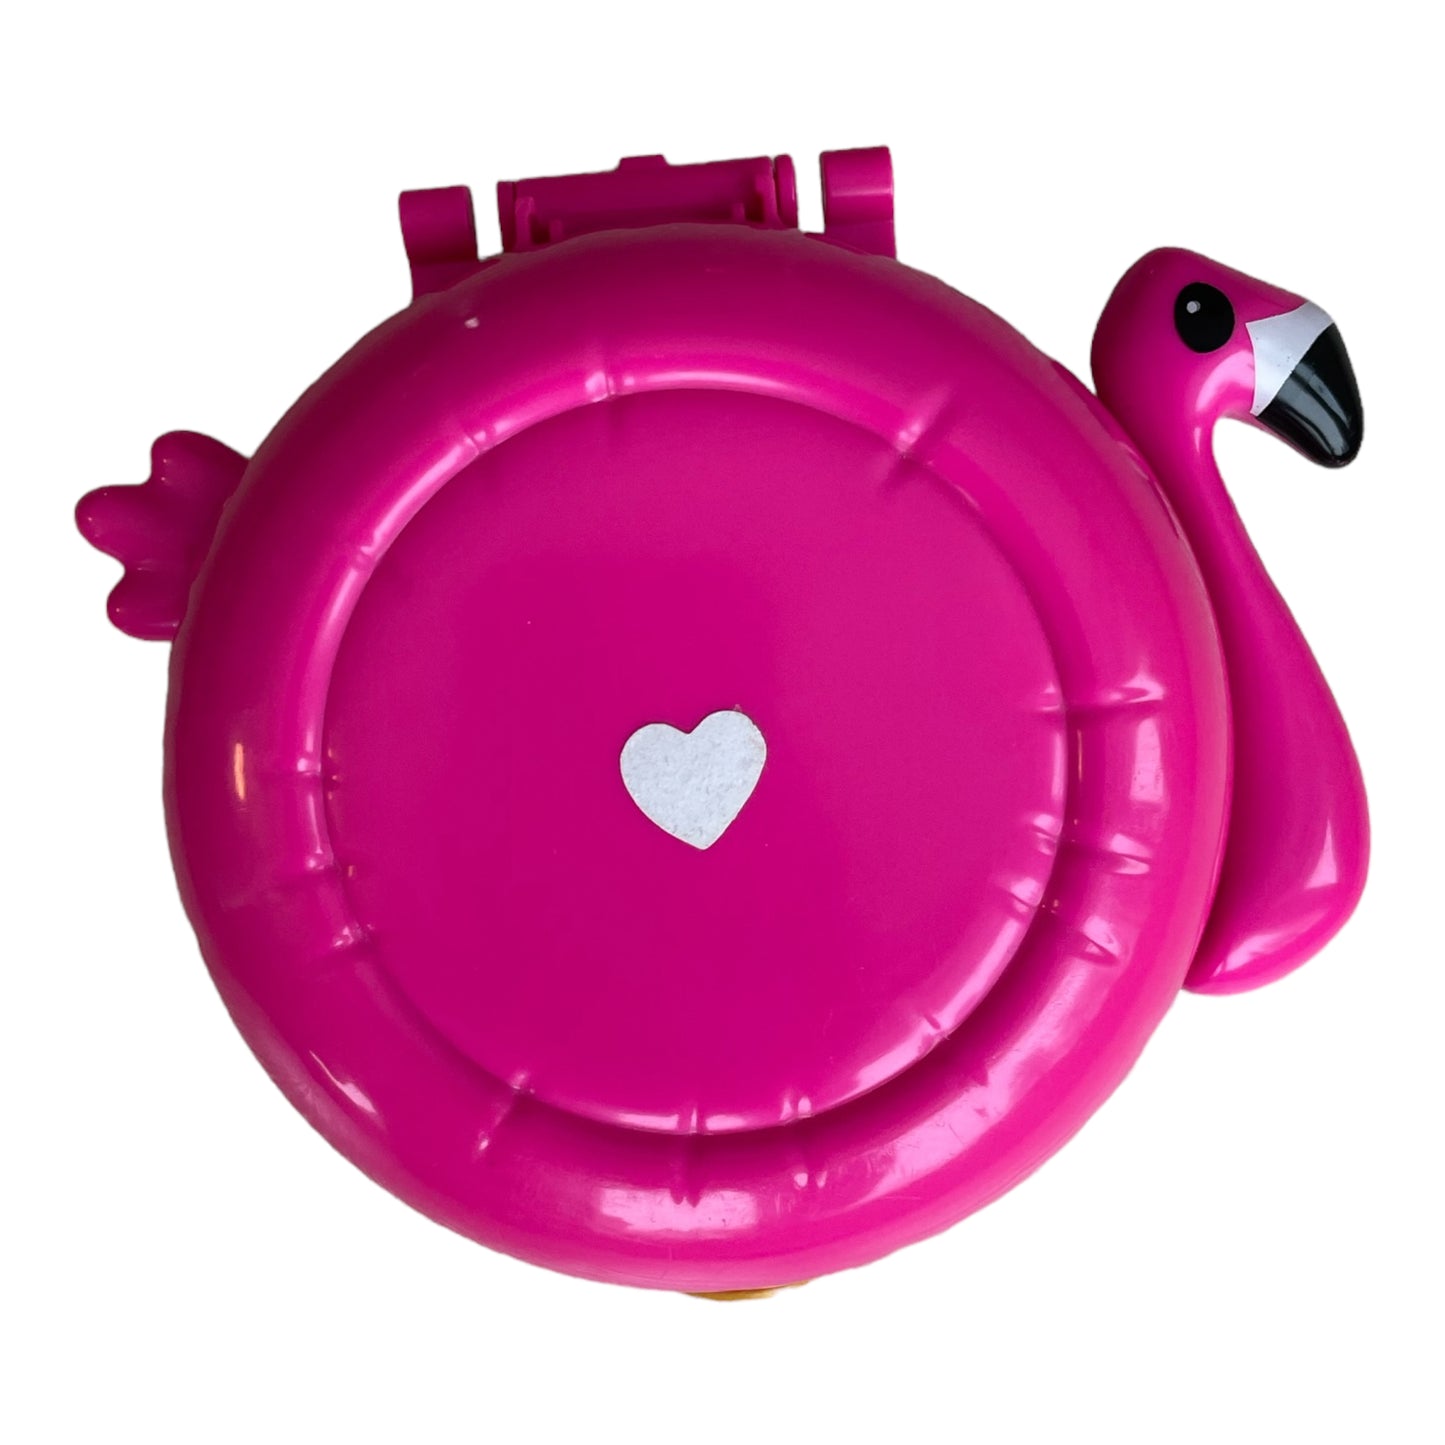 Polly Pocket - Flamingo Floatie Compact